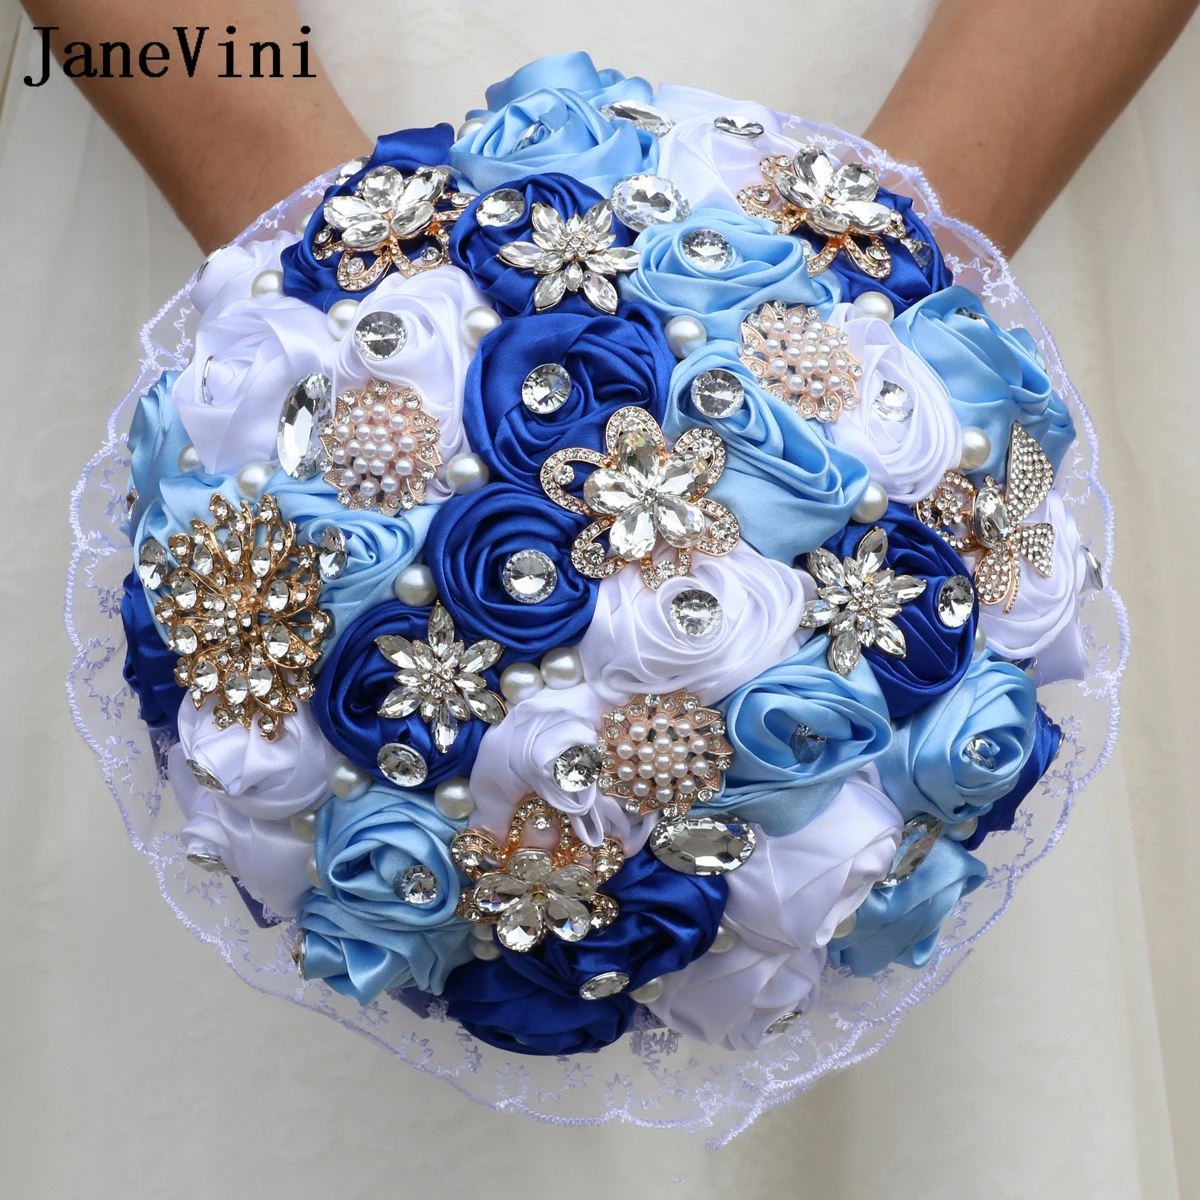 

JaneVini Blue Rose Crystal Diamond Bouquet Wedding Bride Flowers Luxury Beads Pearls Bridal Bouquets Ramos De Flores Artificial